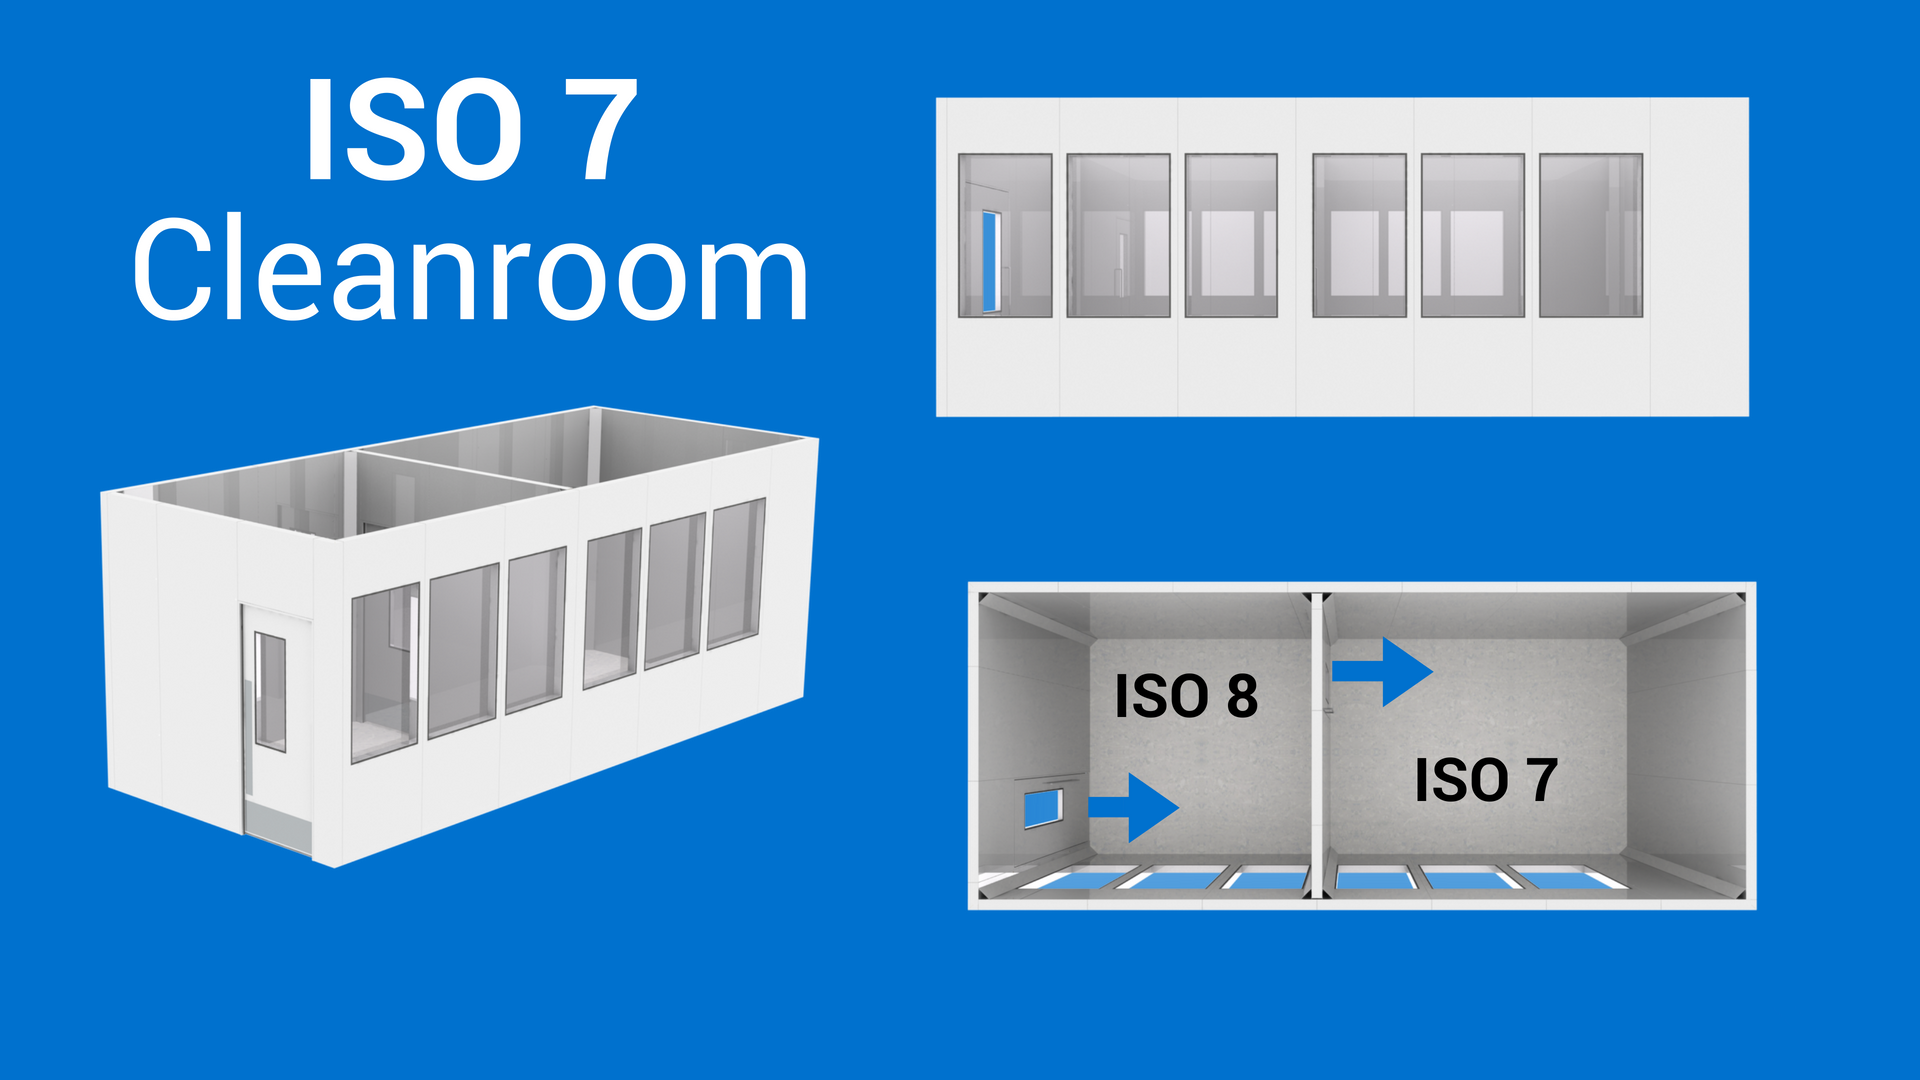 ISO 7 cleanroom